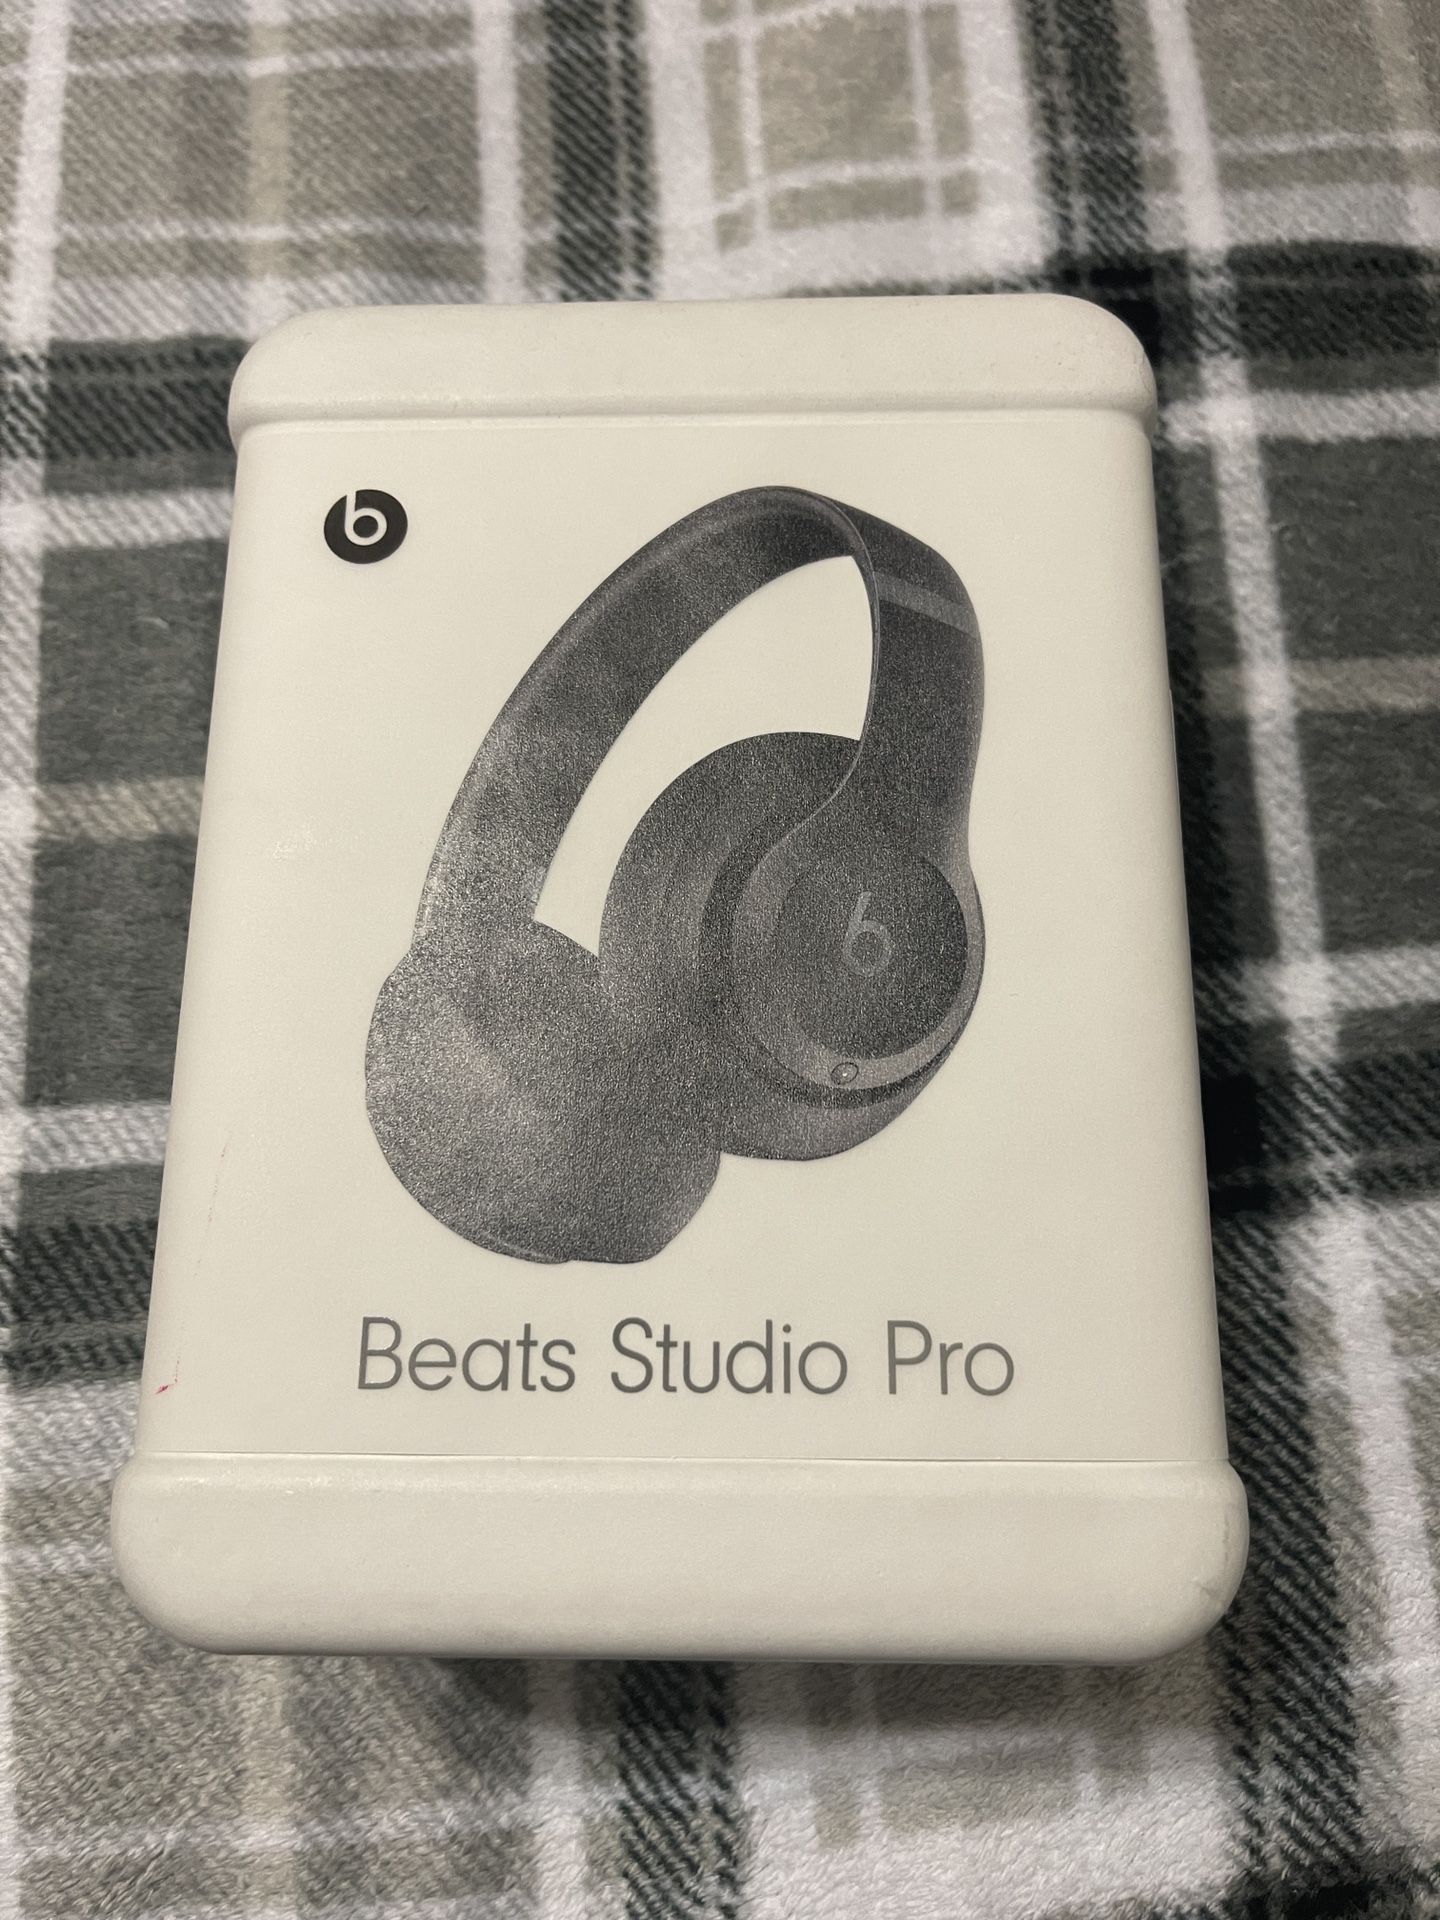 Beats Studio Pro.